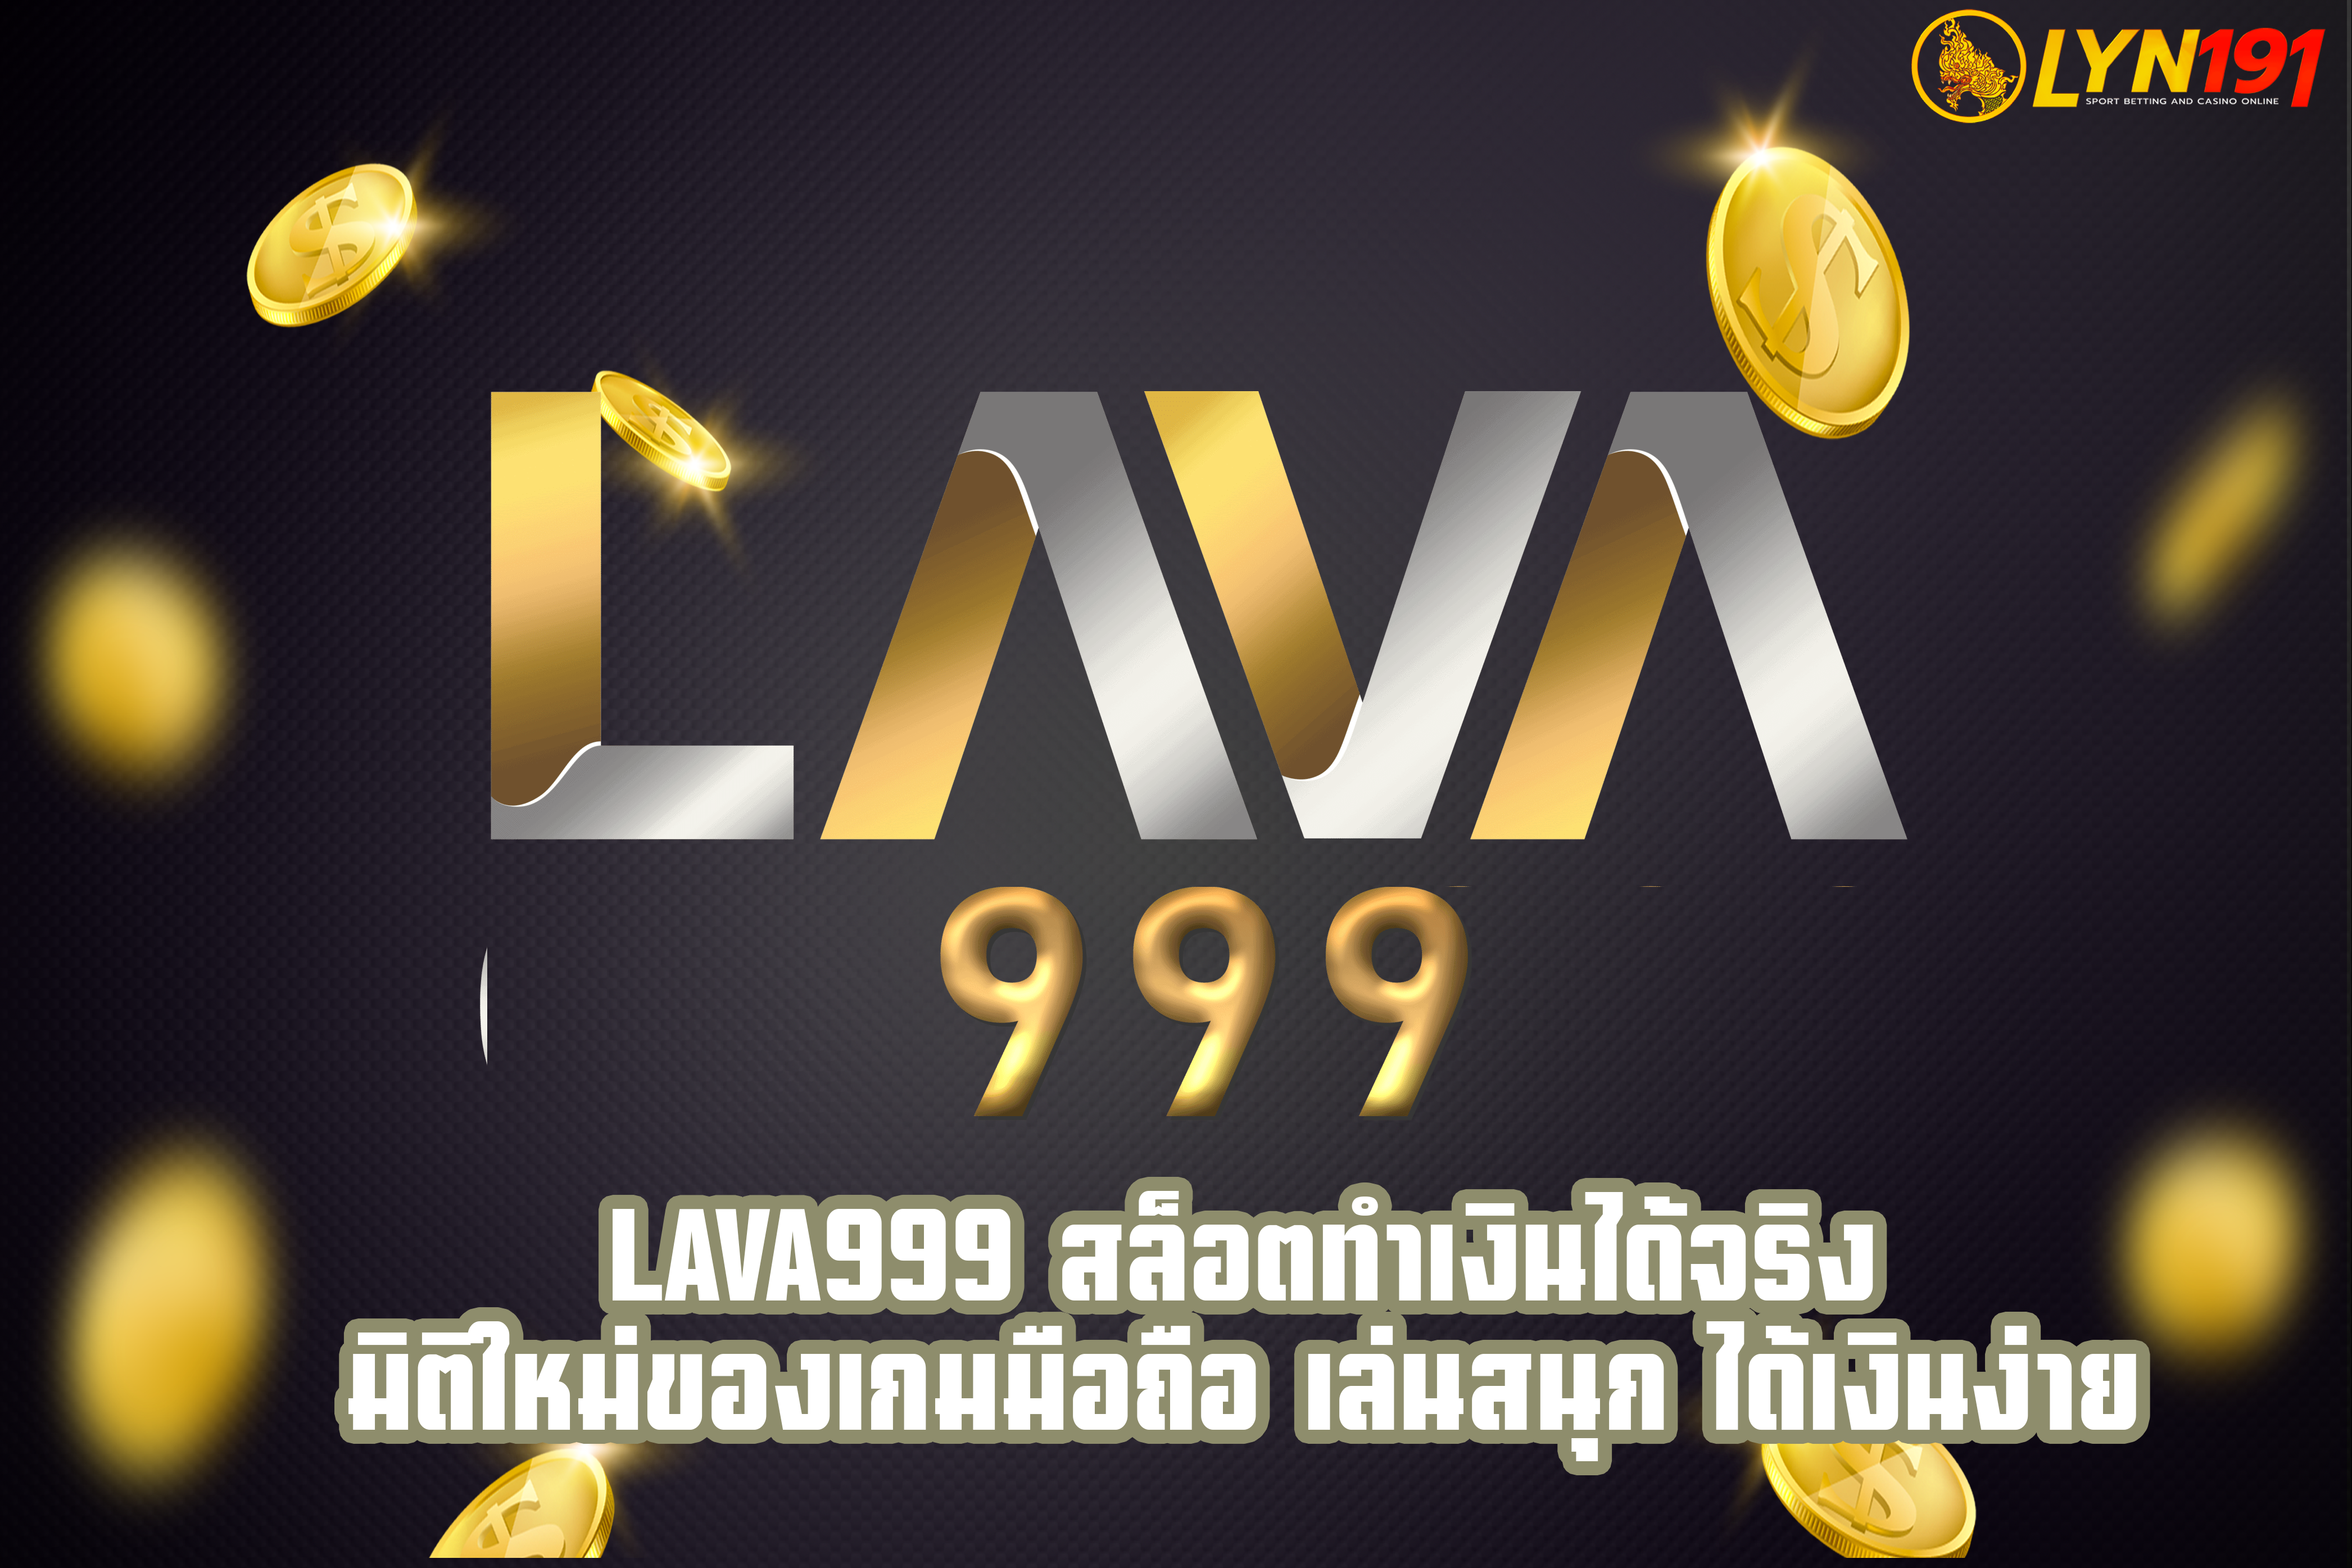 LAVA999 สล็อตทำเงินได้จริง มิติใหม่ของเกมมือถือ เล่นสนุก ได้เงินง่าย